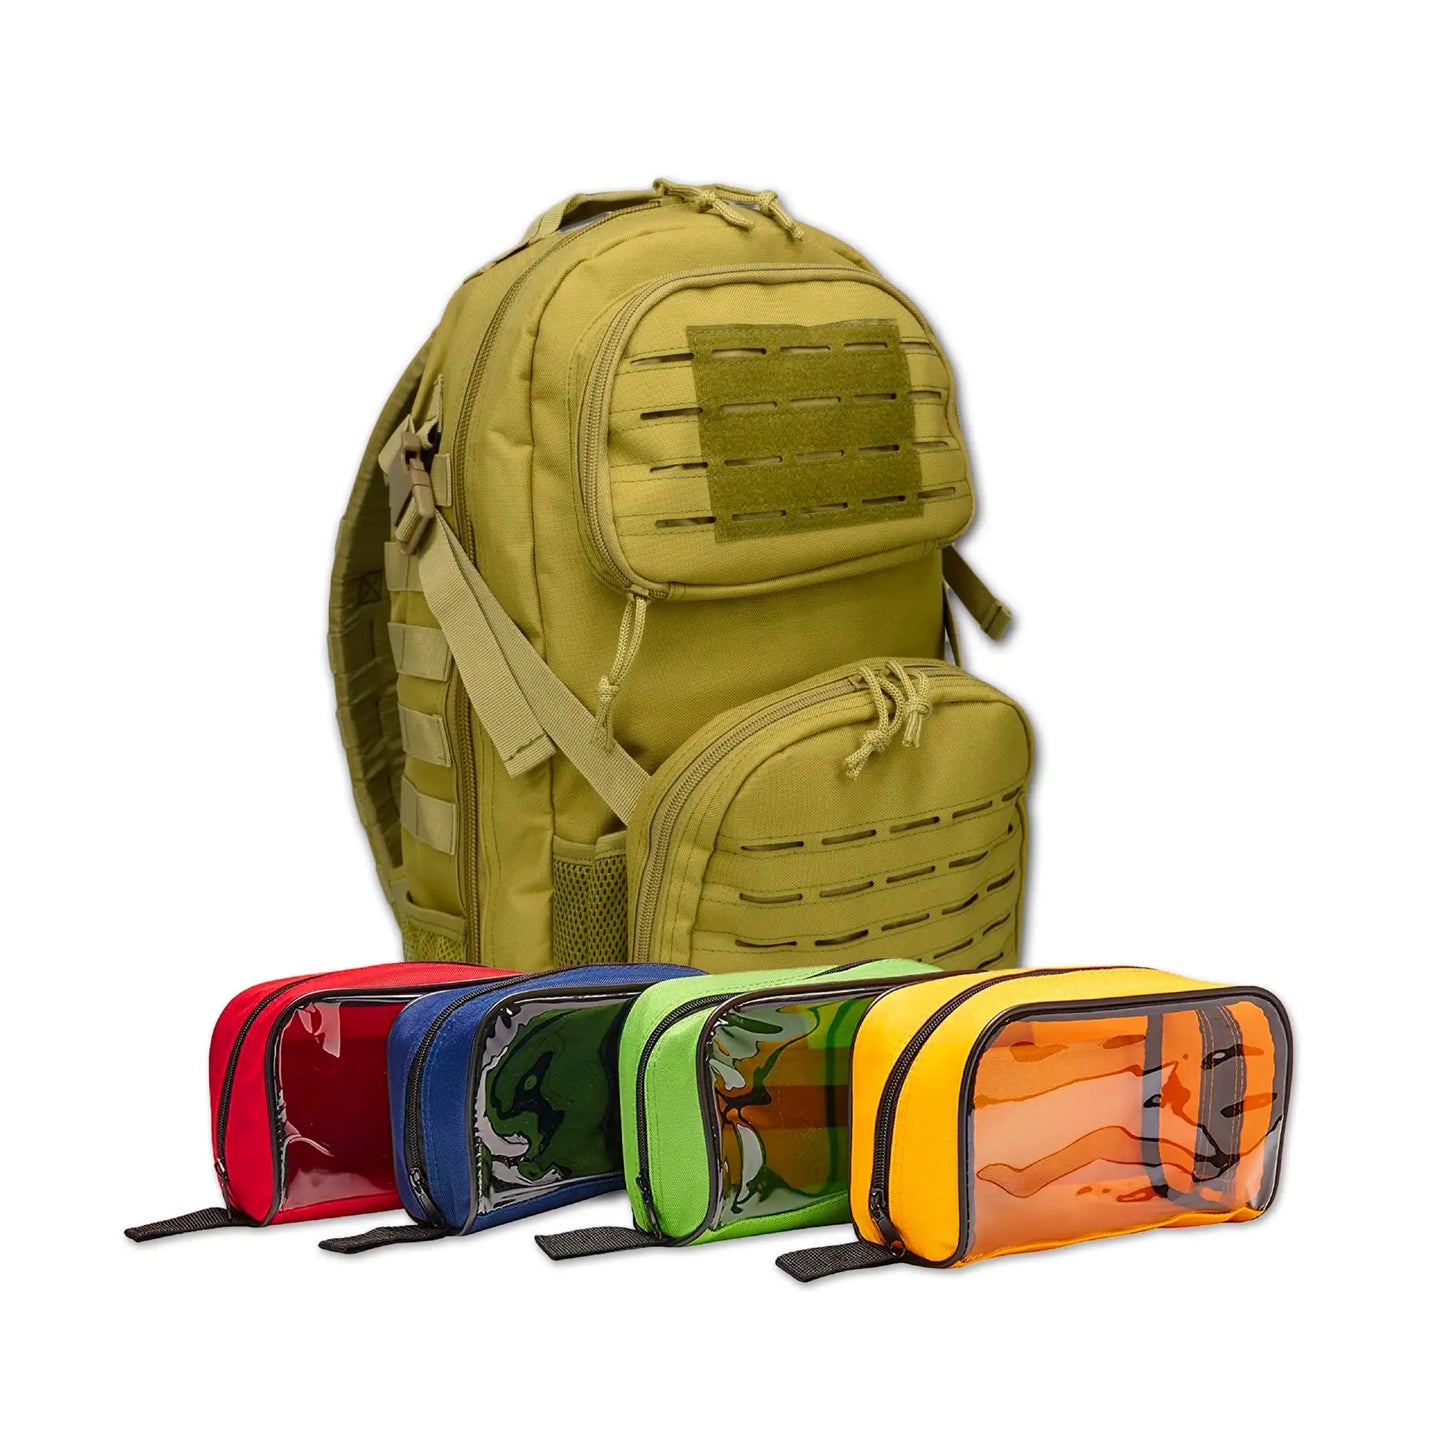 Premium MOLLE, IFAK trauma backpack w Trauma Medical Kit